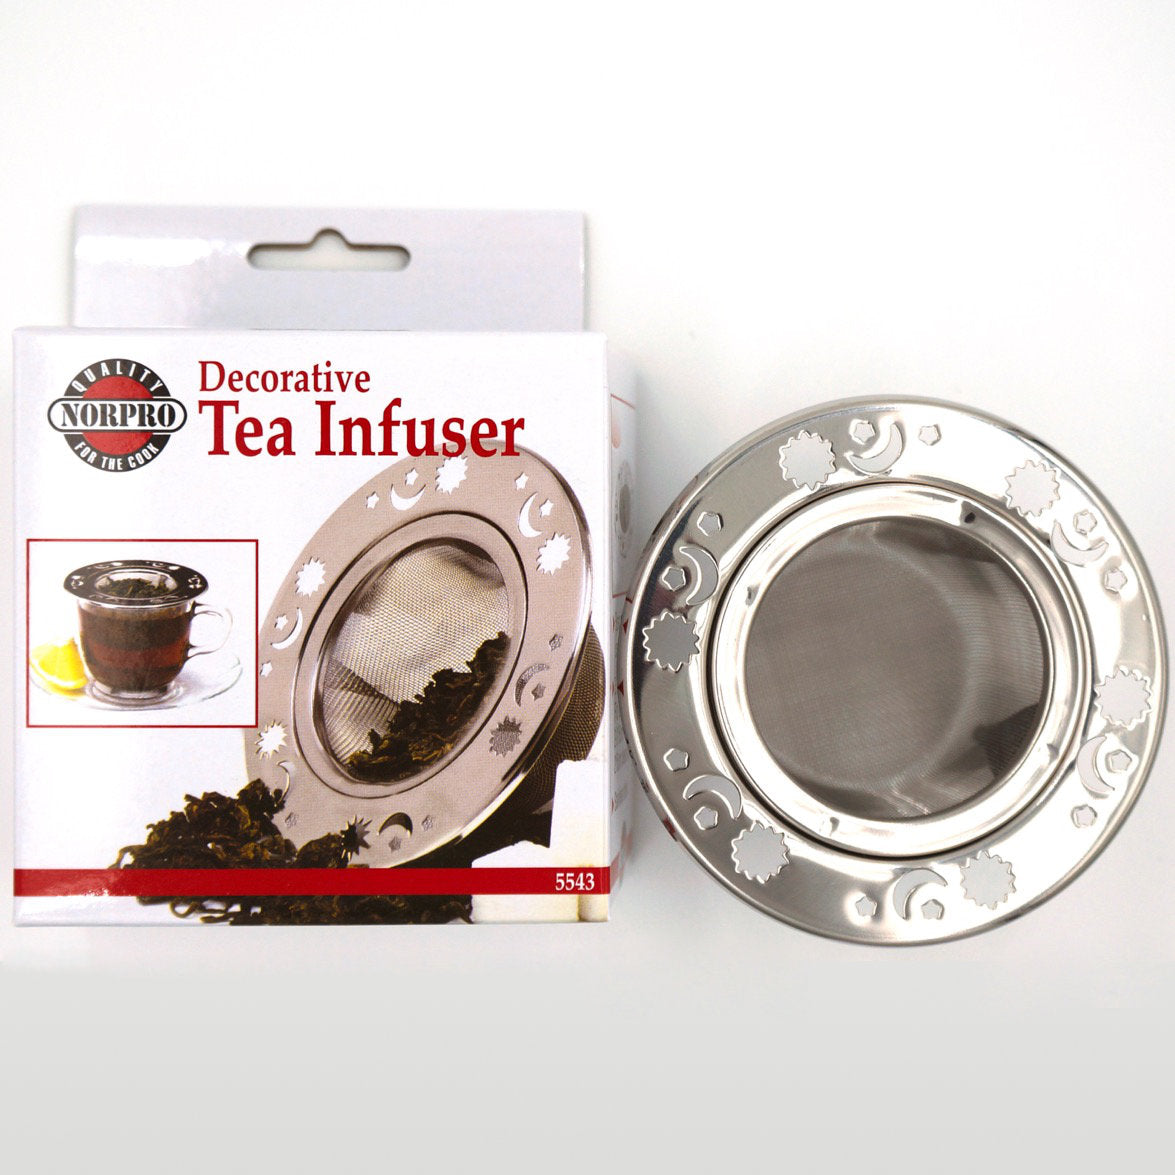 Norpro decorative tea infuser package view